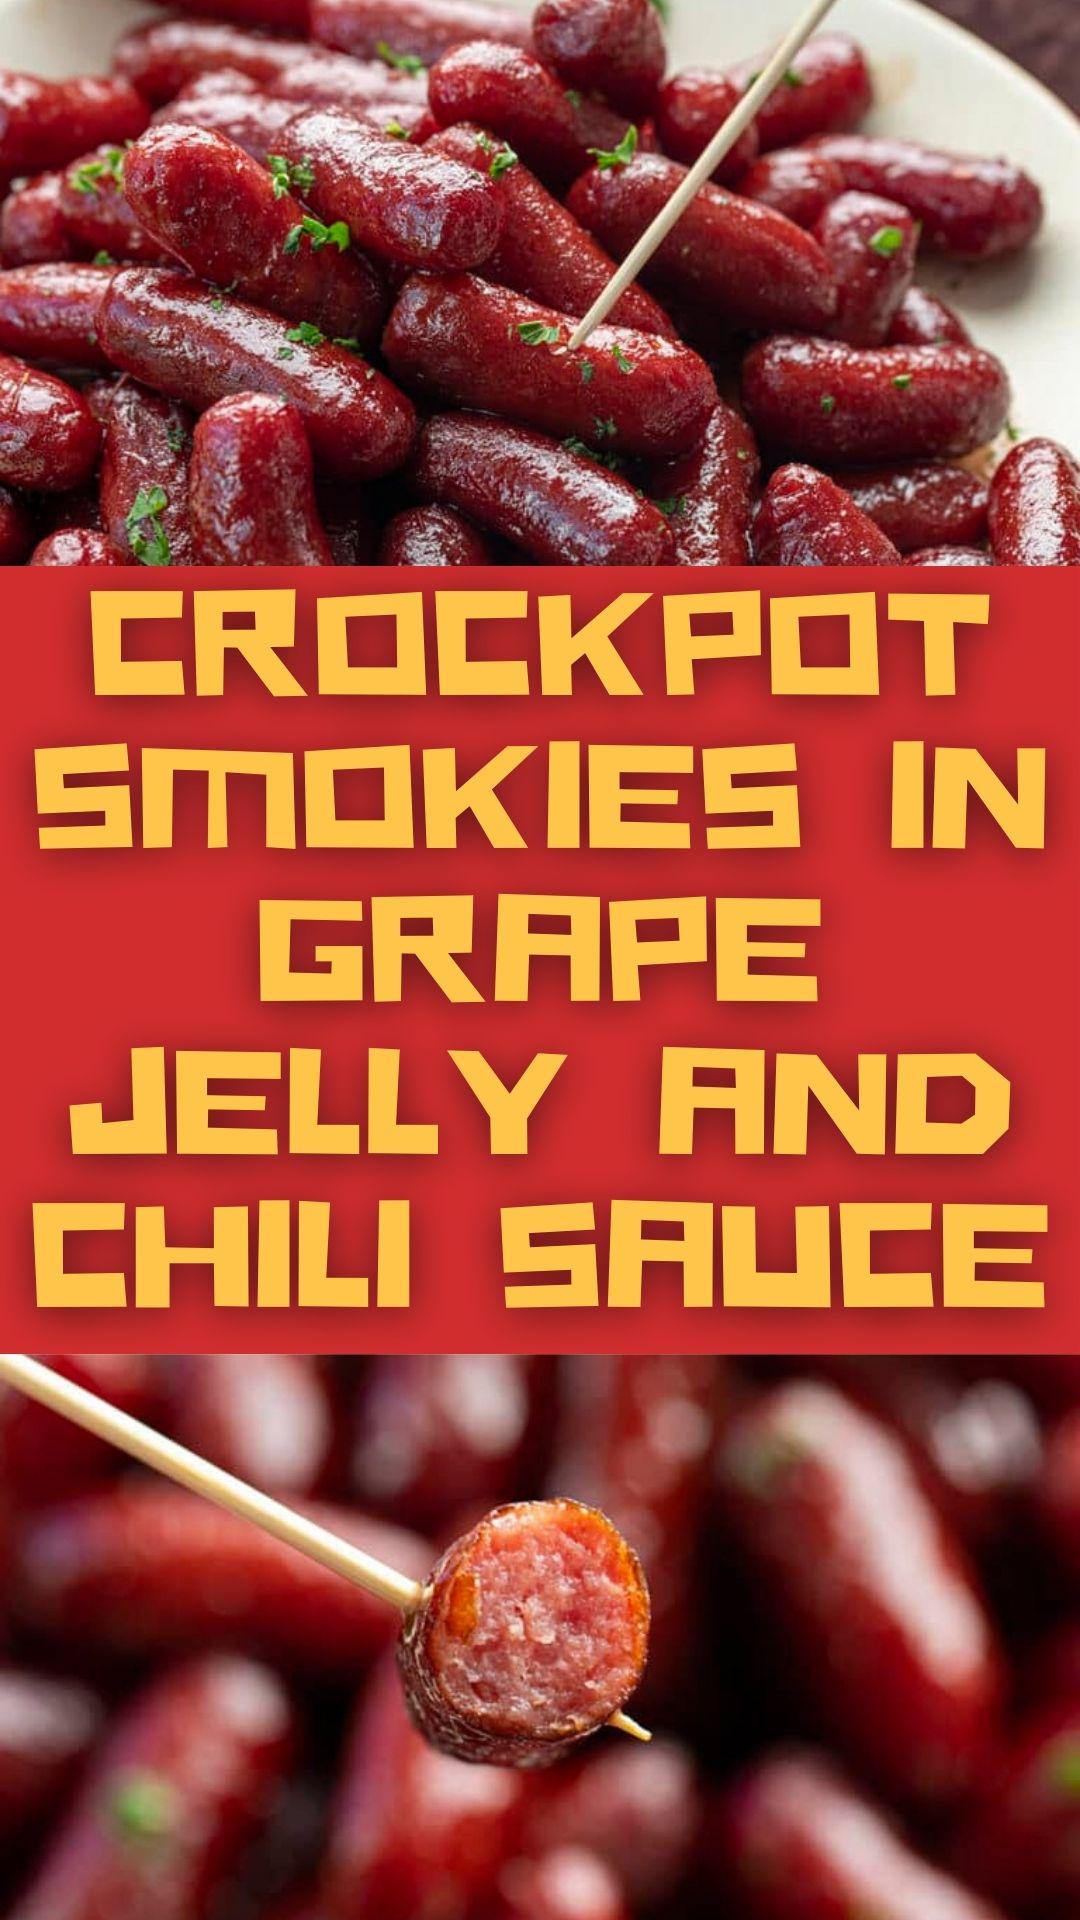 Crockpot Smokies in Grape Jelly and Chili Sauce